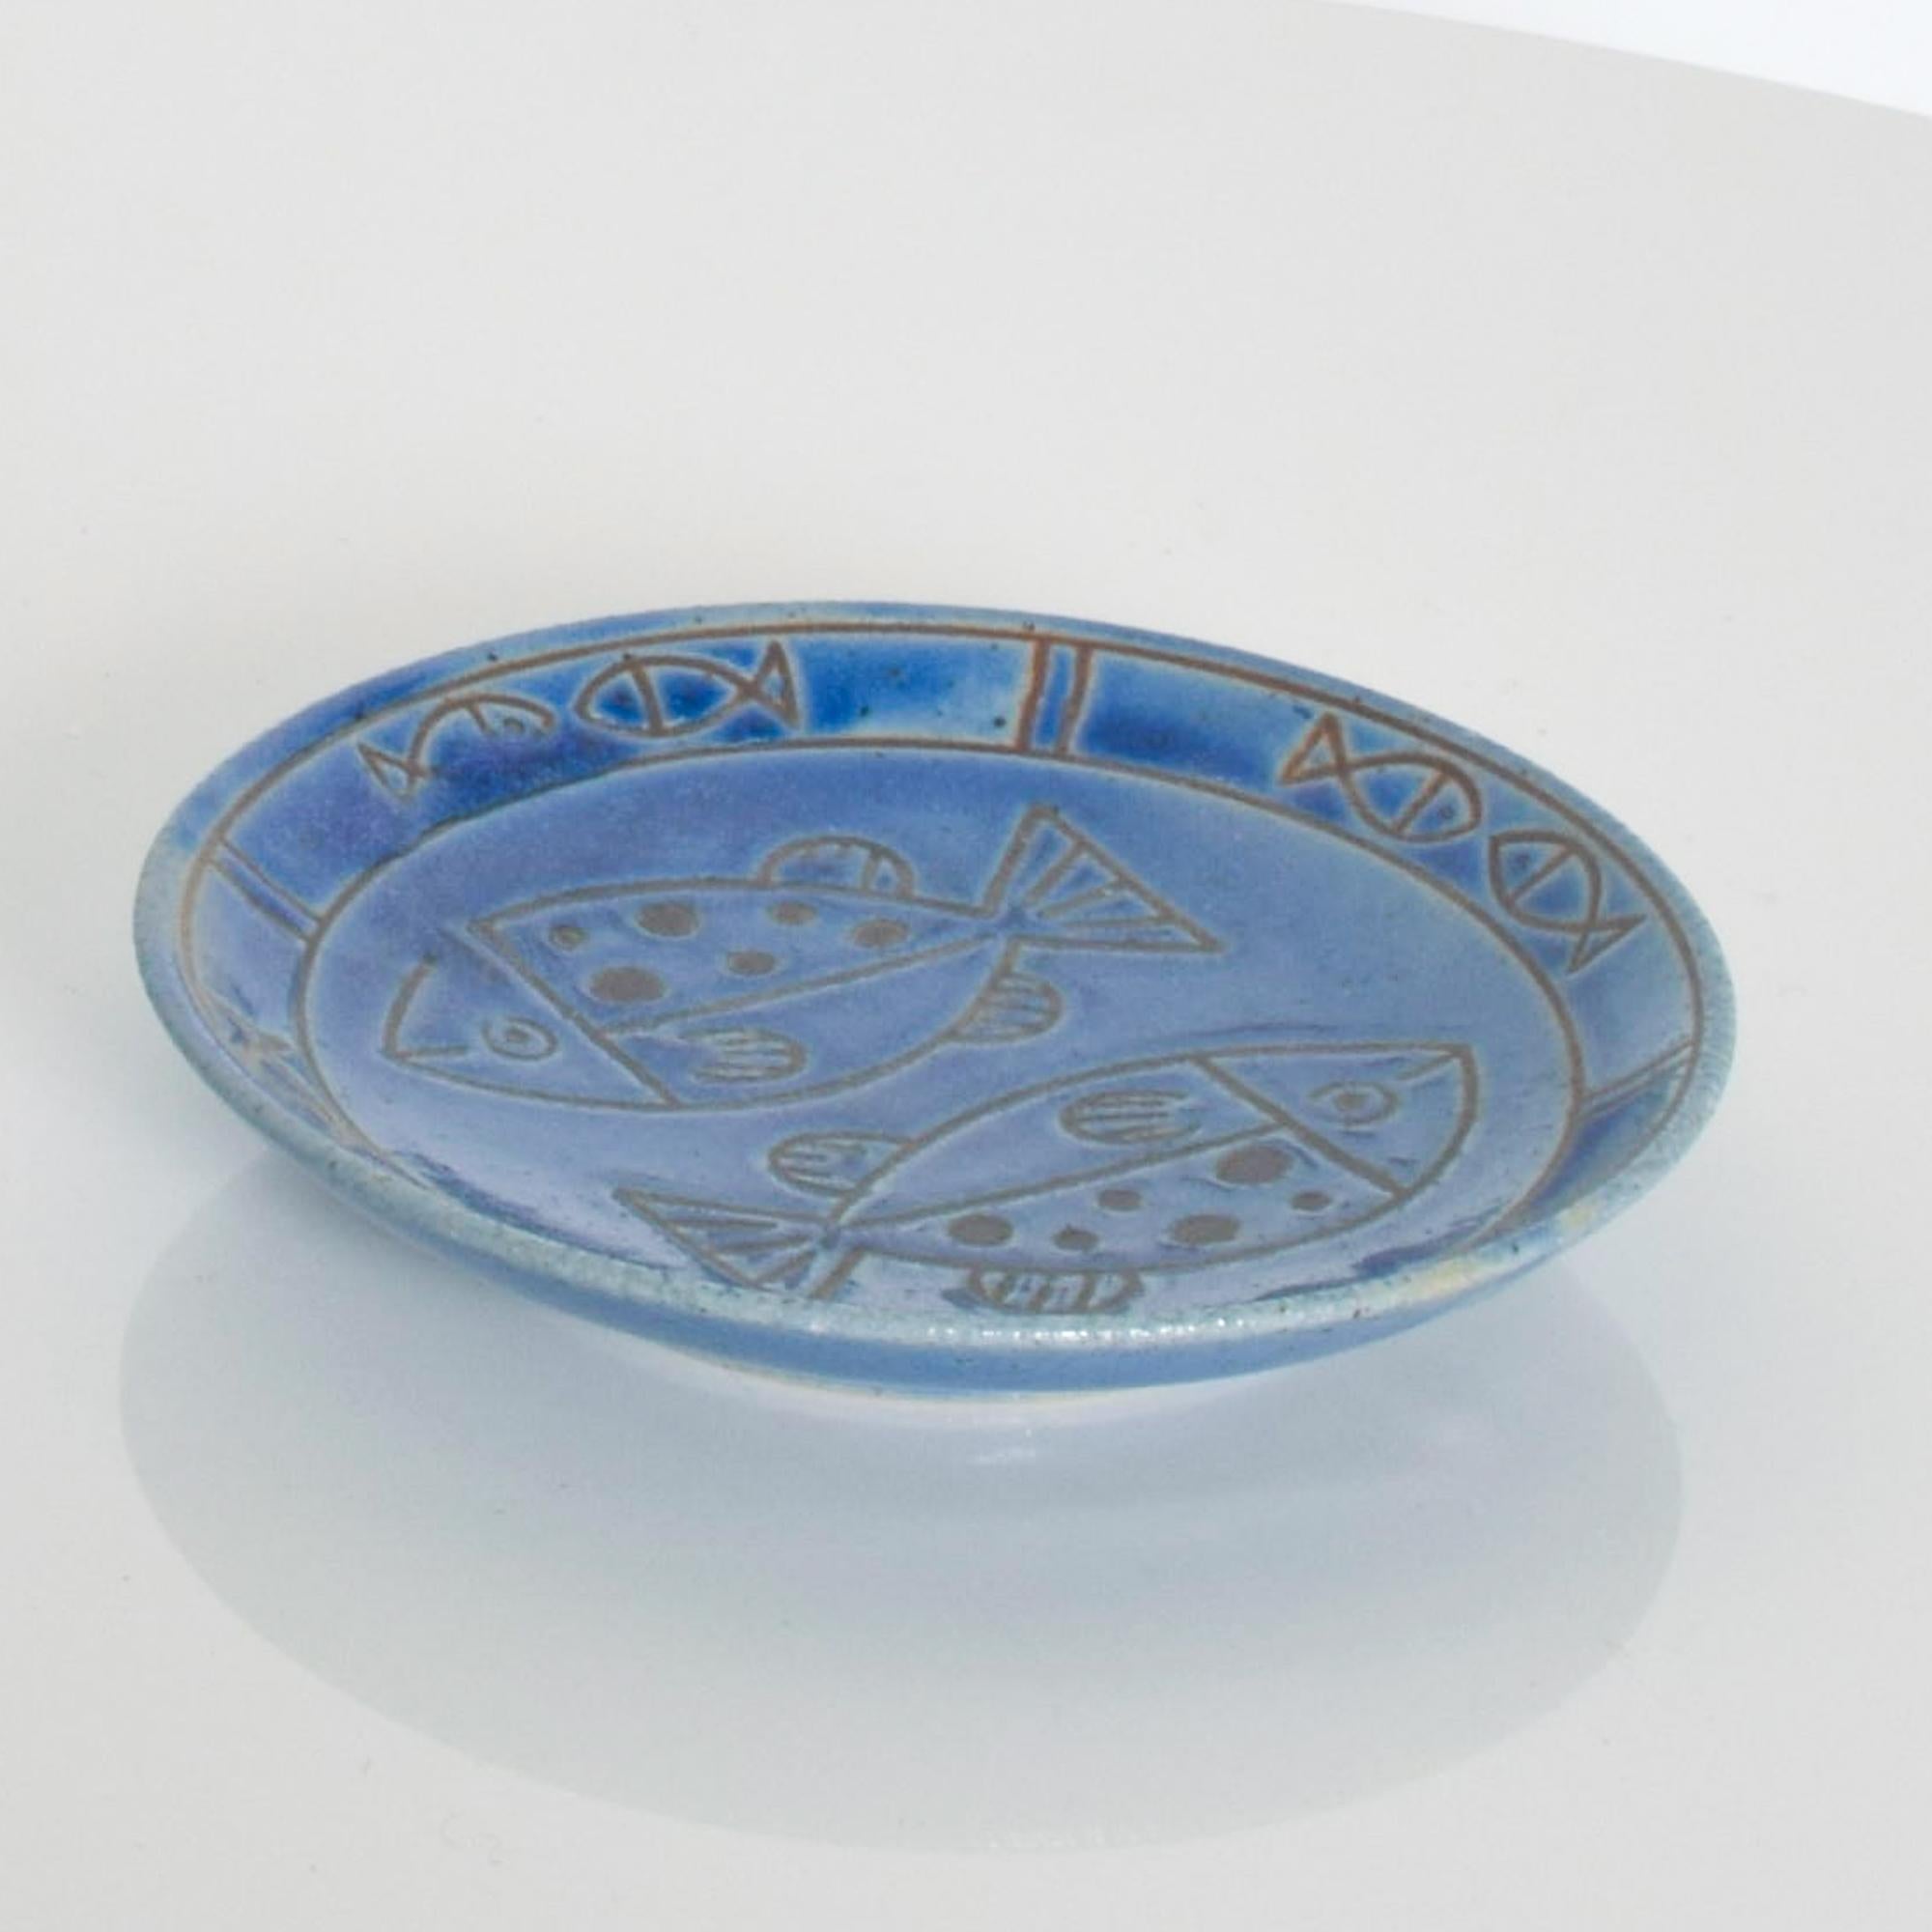 Vintage religious art Christian faith fish symbol Pisces decorative dish display etched ceramic plate in cobalt blue
Measures: 5.25